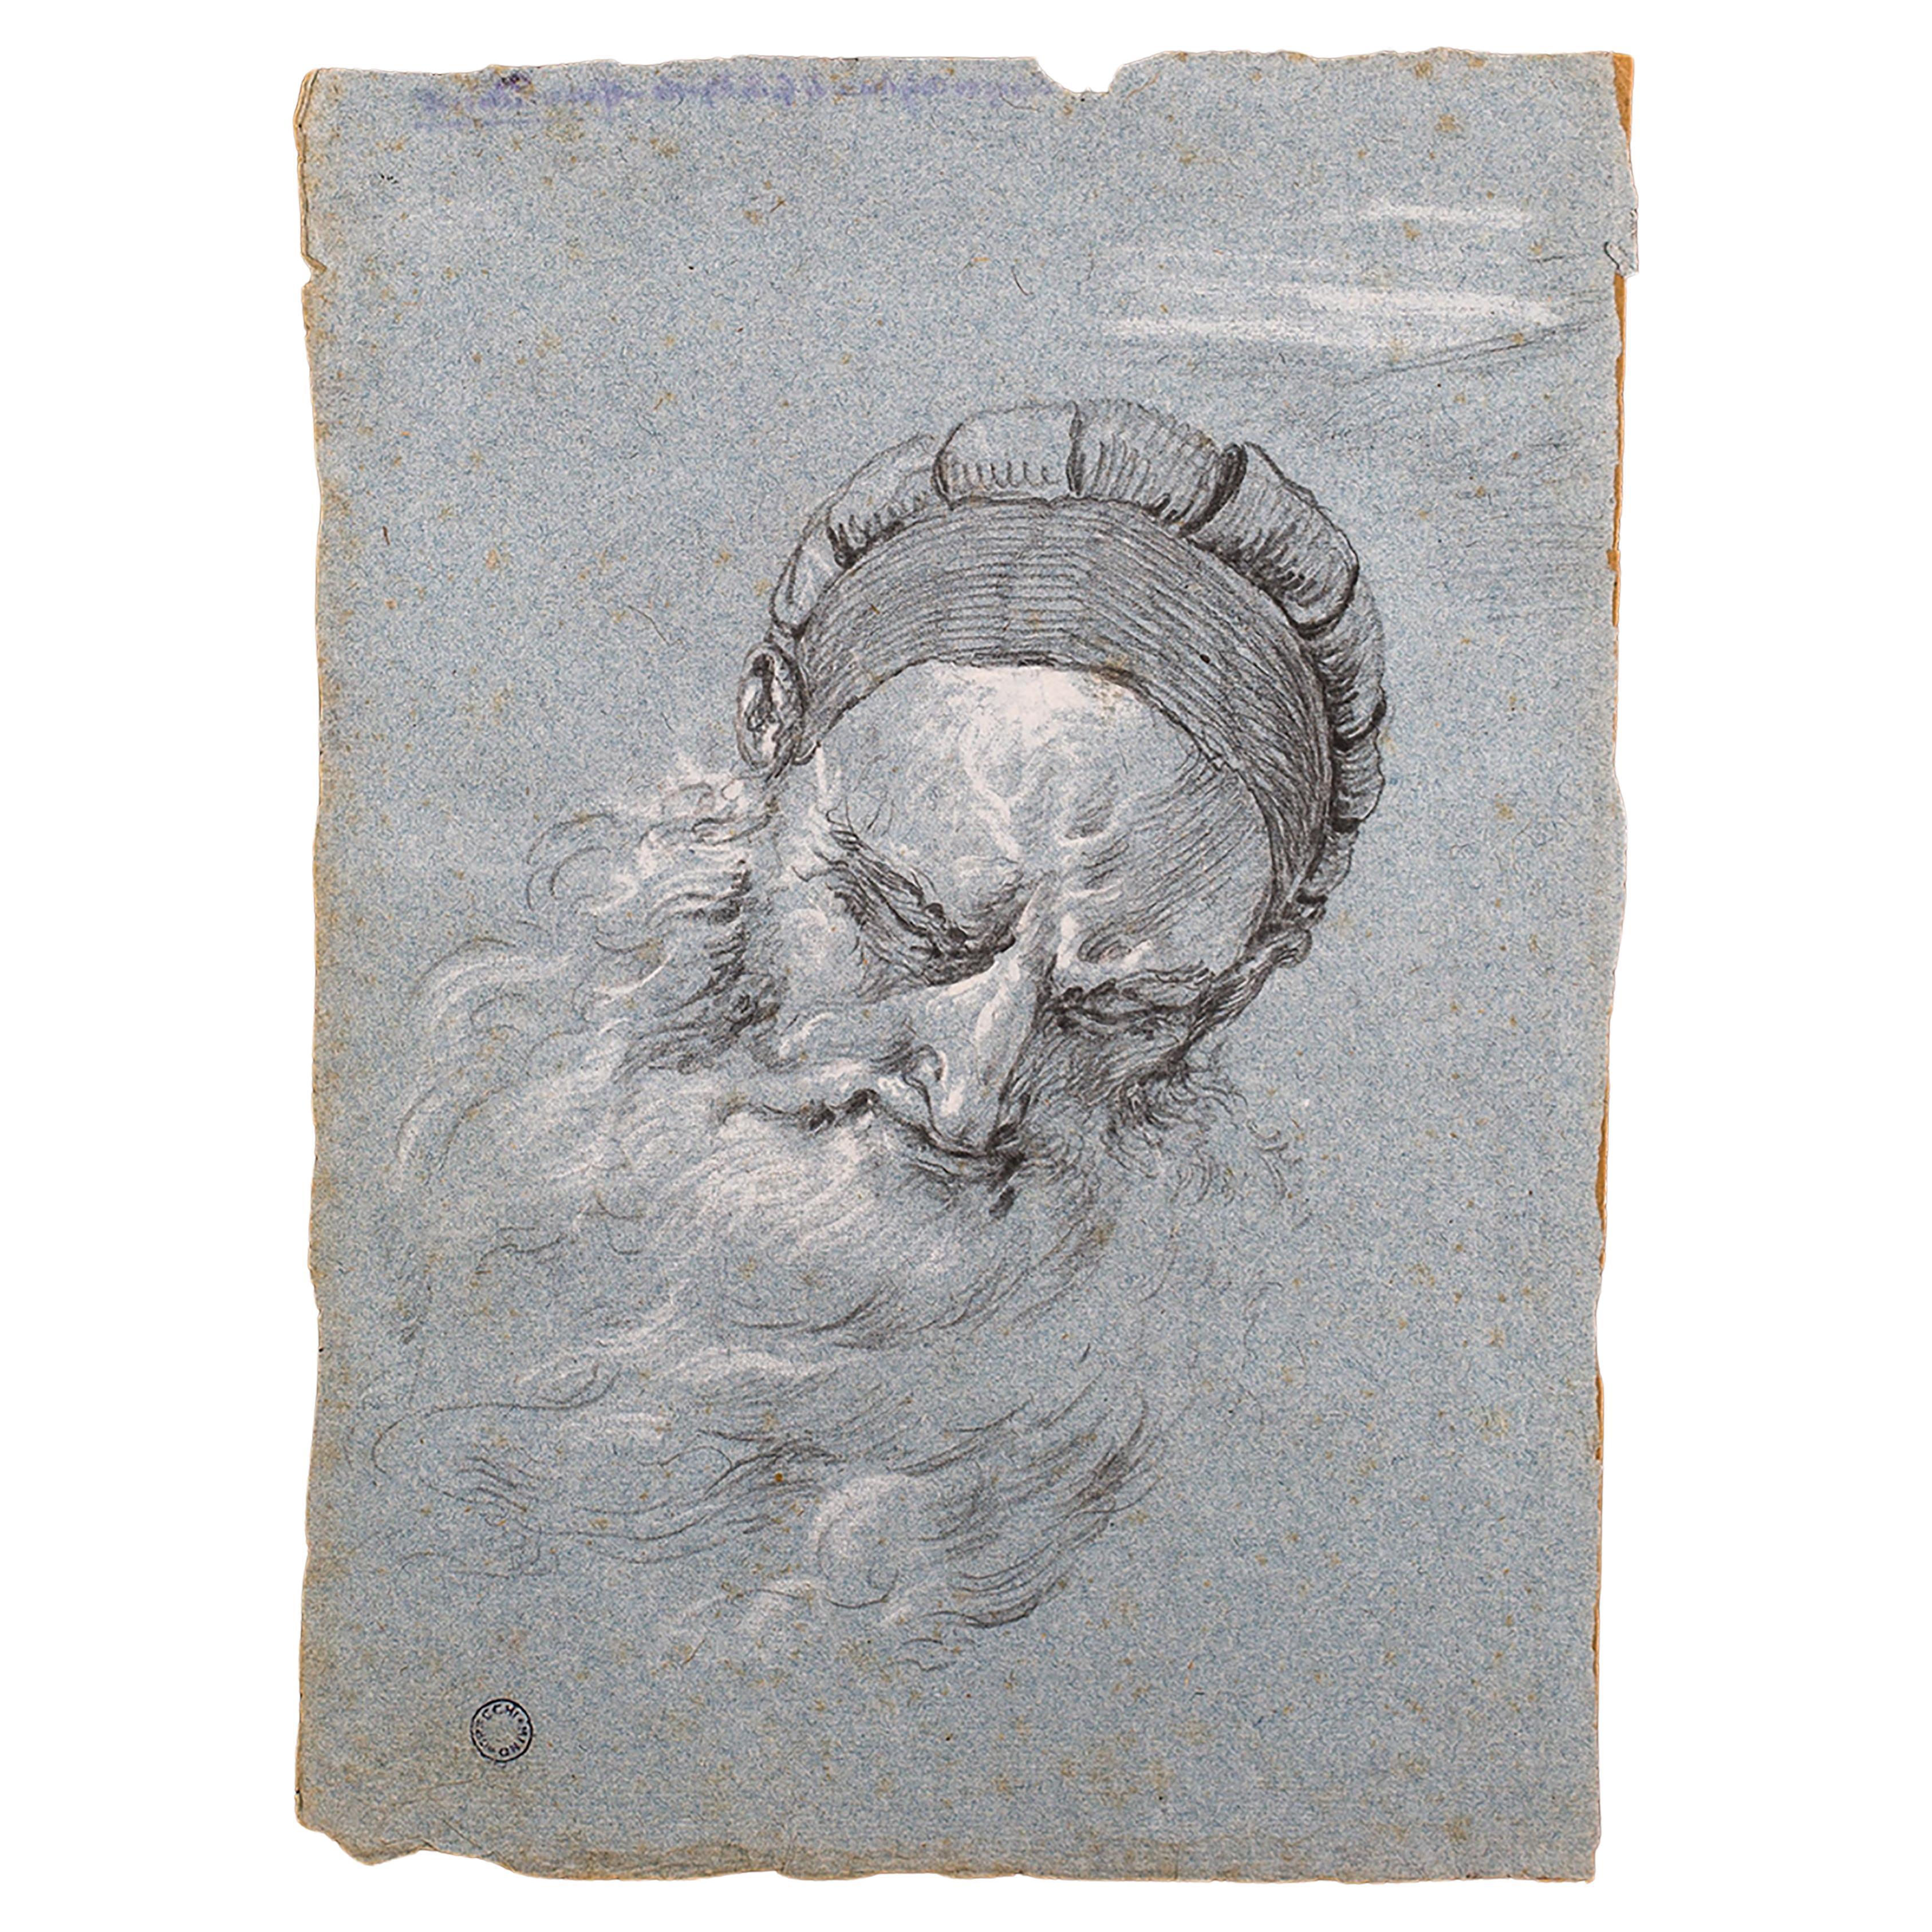 A fine chiaroscuro drawing of a pensive Bearded Venetian Man on blue paper